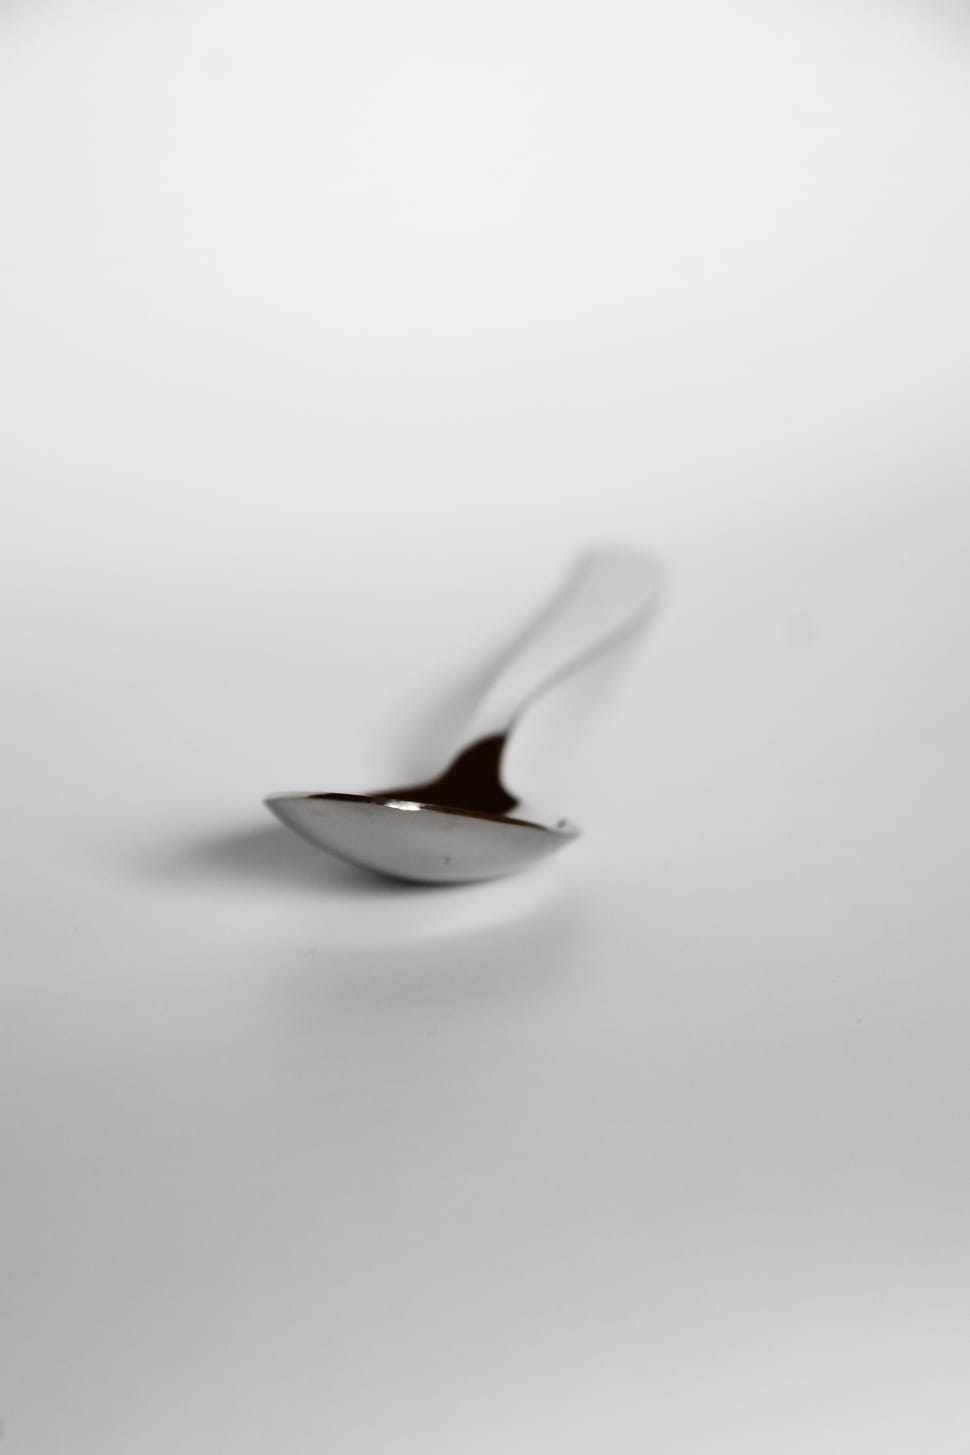 grey metal spoon preview